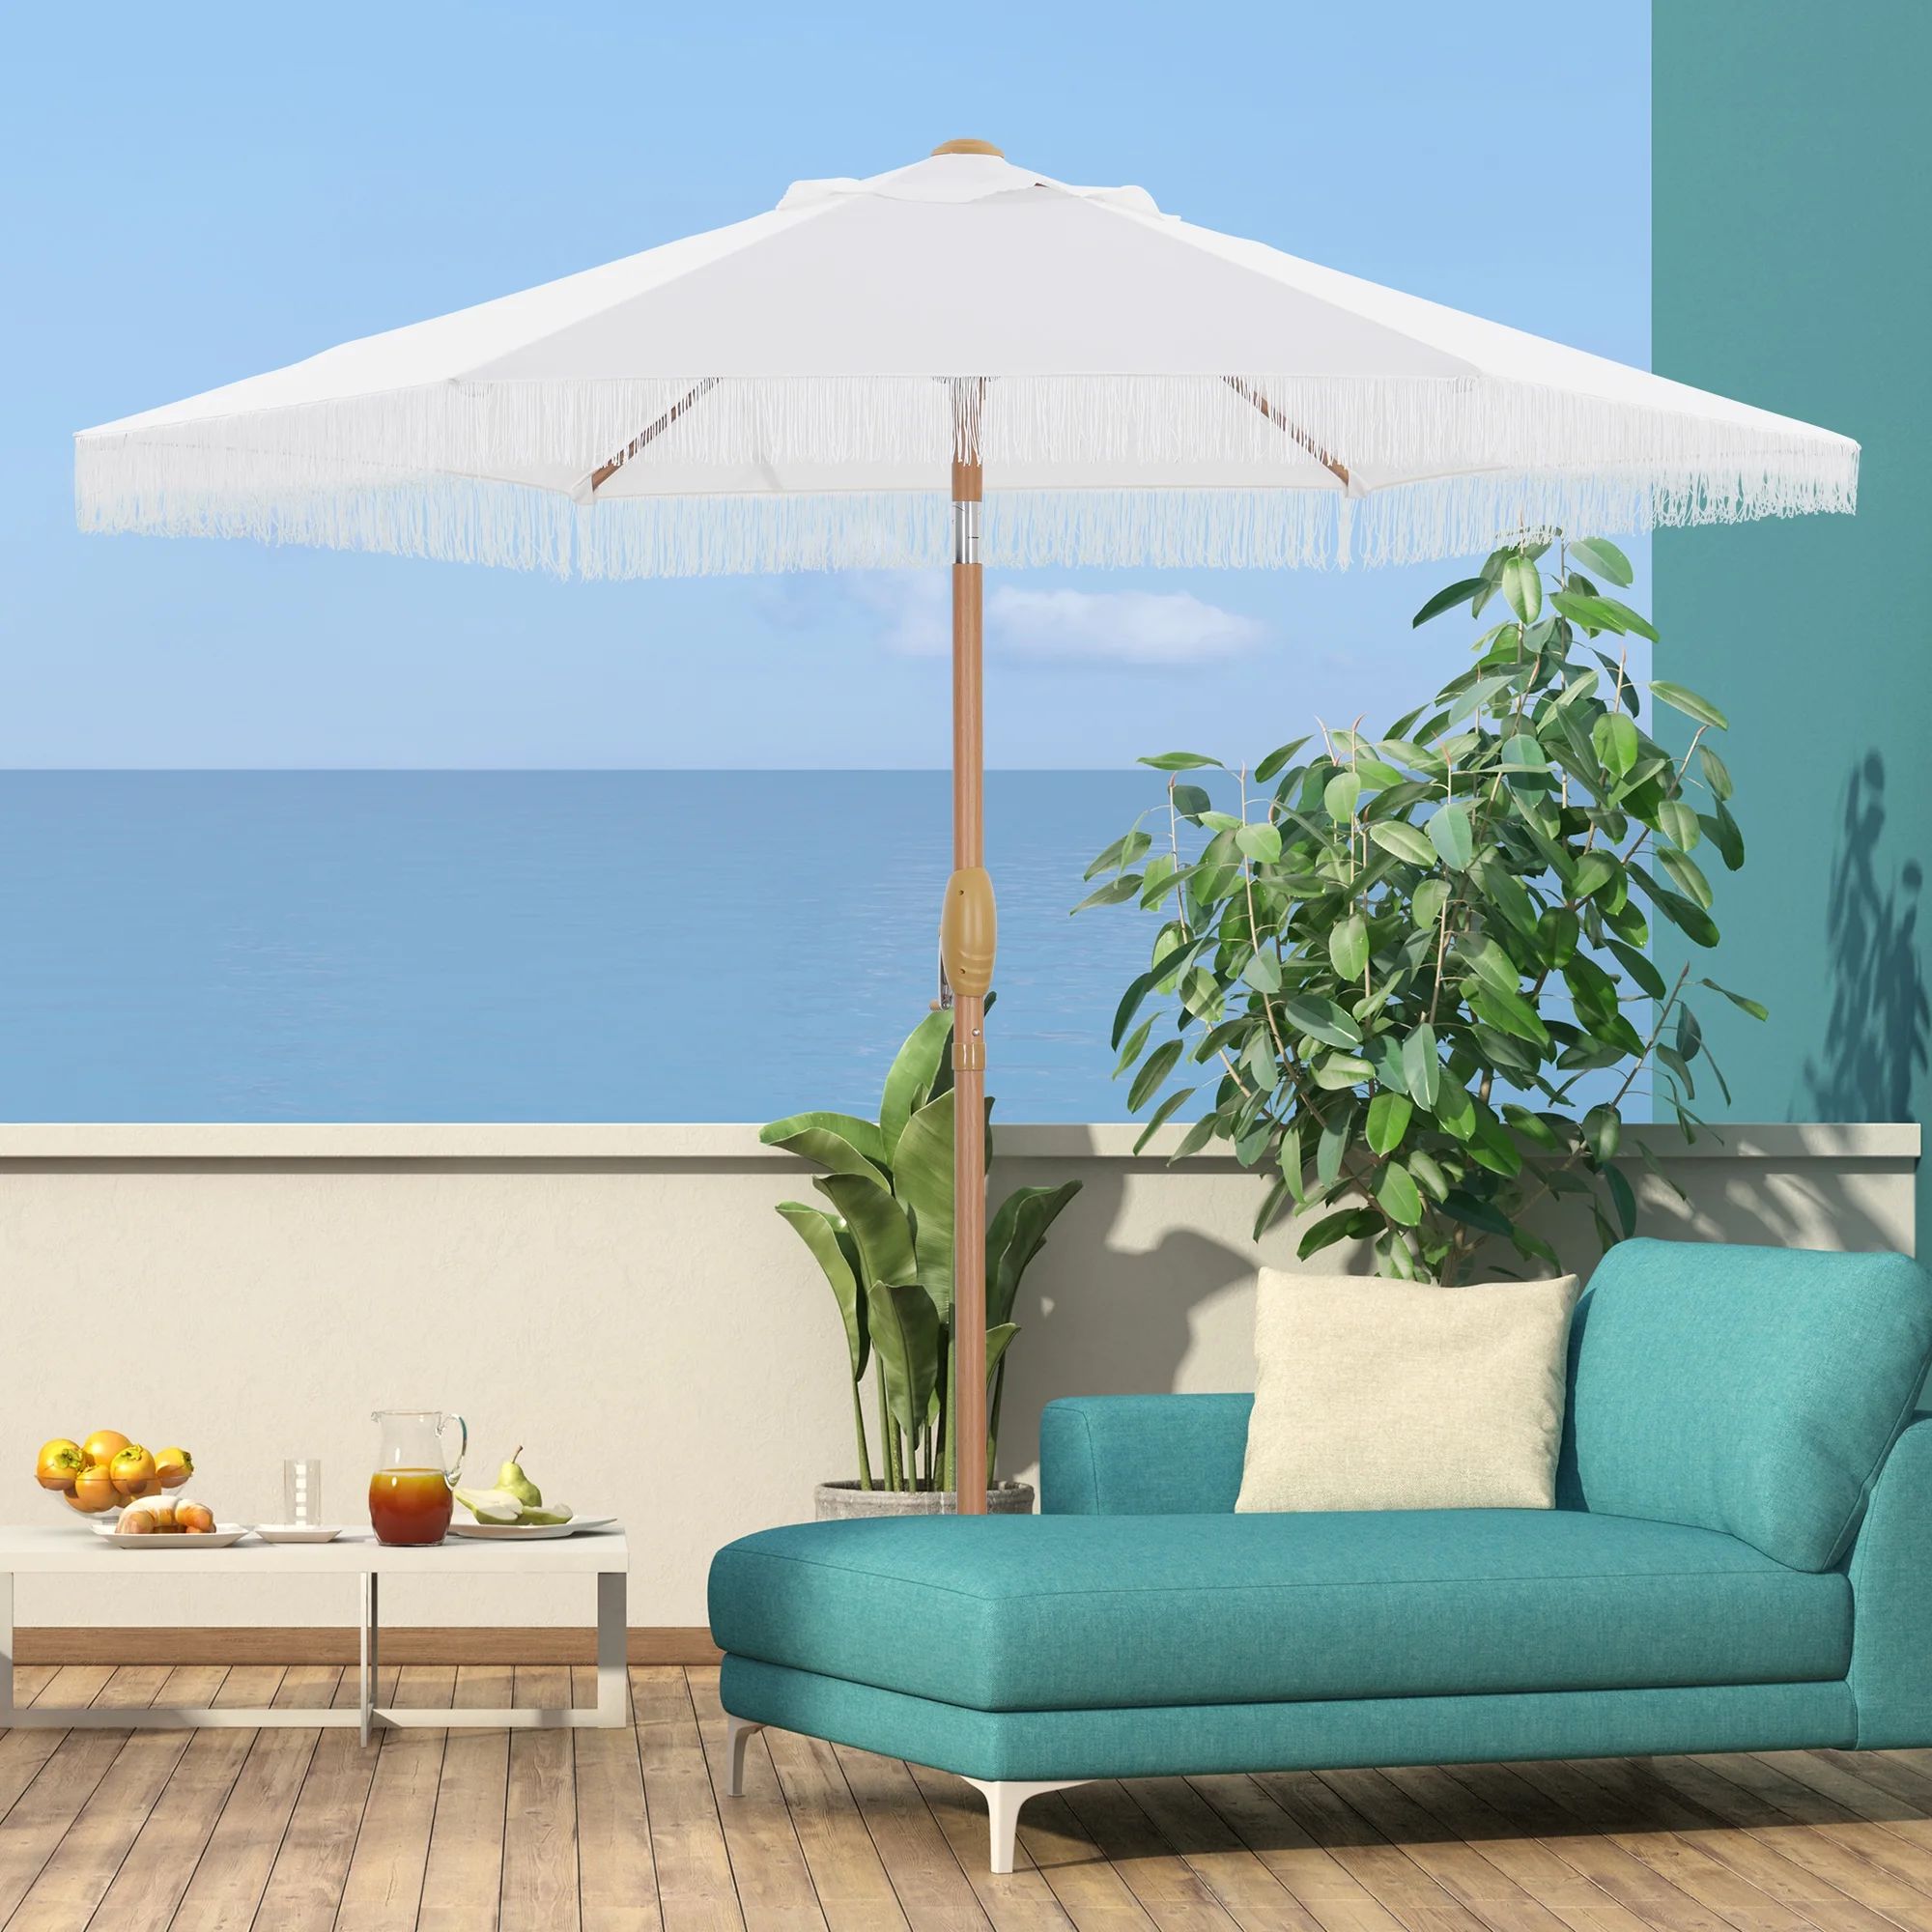 Autlaycil 7.5 ft Patio Umbrella with Fringe, Beach Pool and Yard, White | Walmart (US)